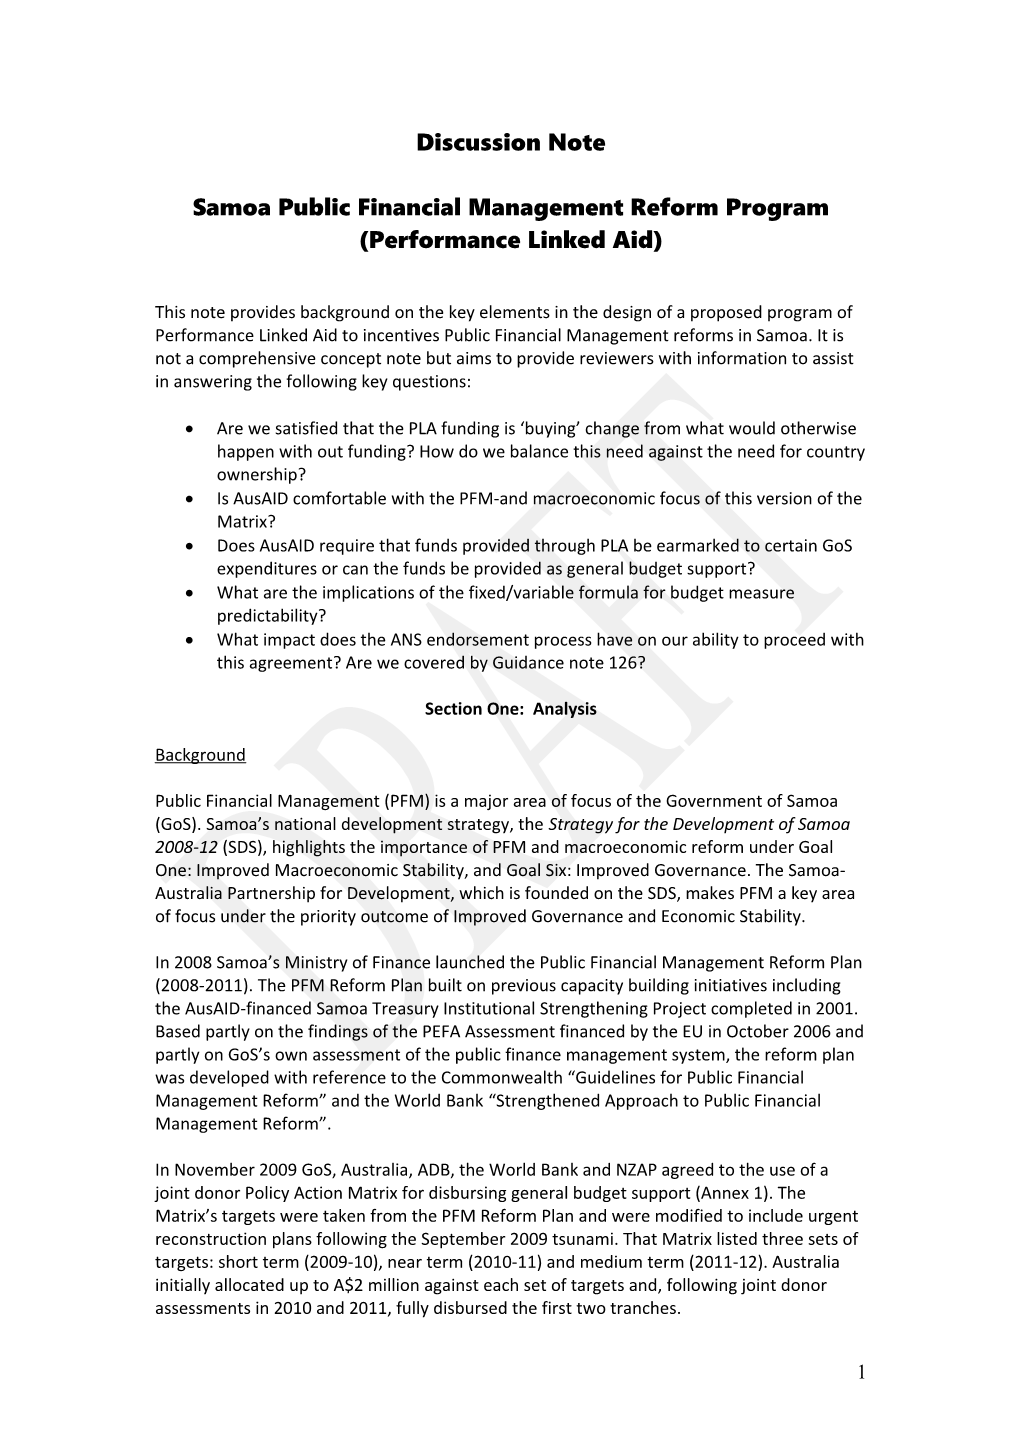 Samoa Public Financial Management Reform Program (Performance Linked Aid)